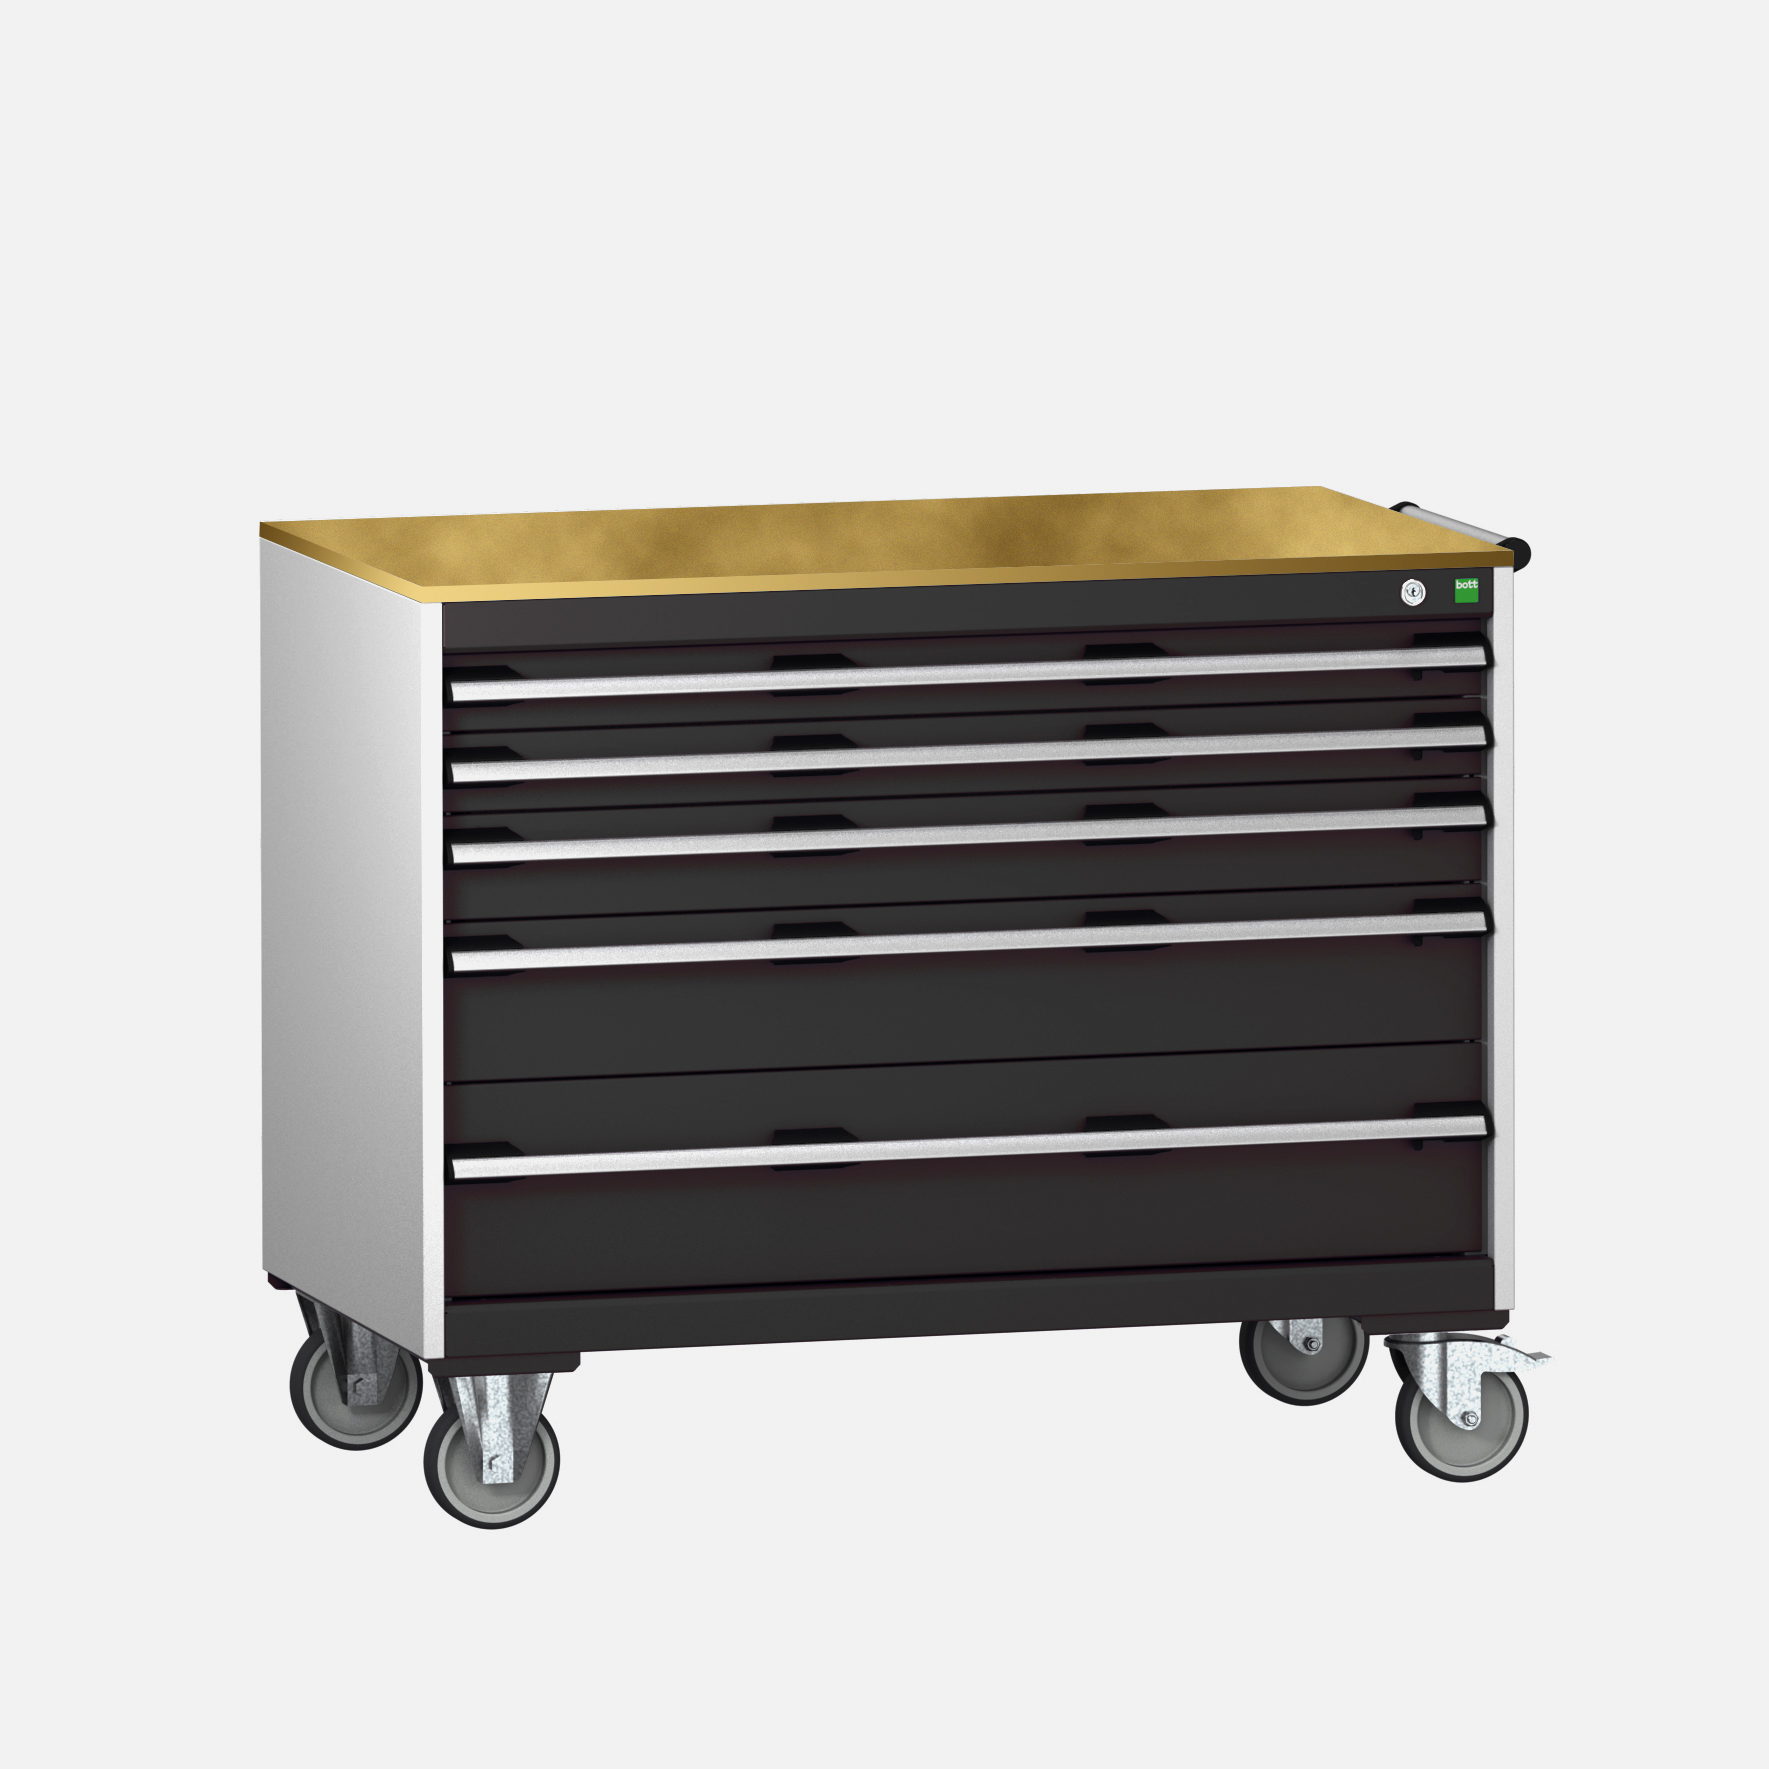 Bott Cubio Mobile Drawer Cabinet With 5 Drawers & Multiplex Worktop - 40402163.19V